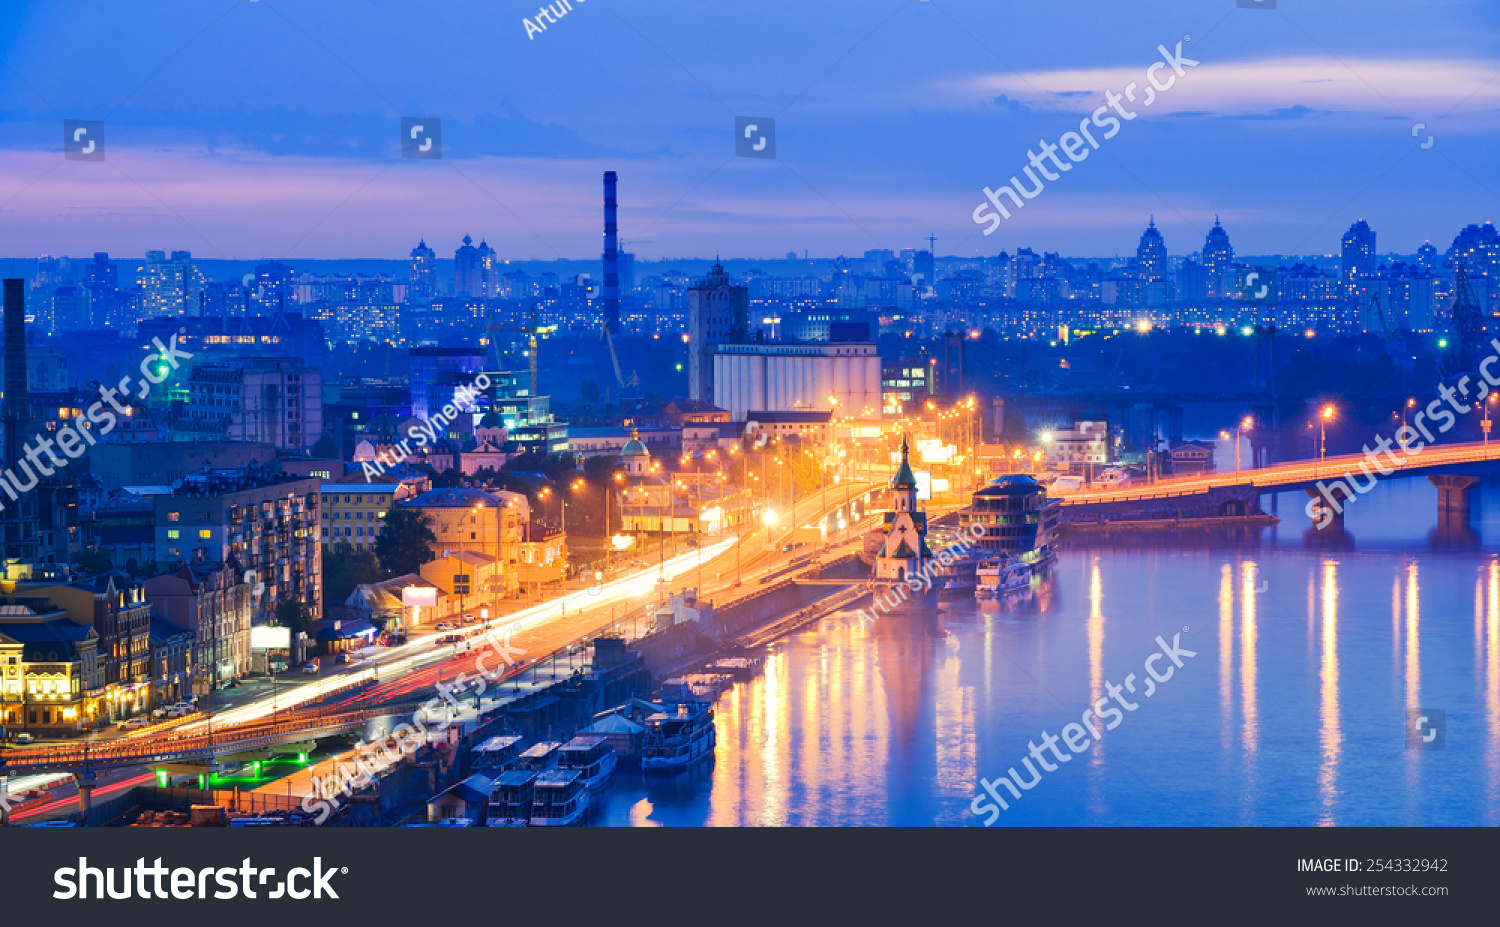 Ukraine capital of Visit Kiev: